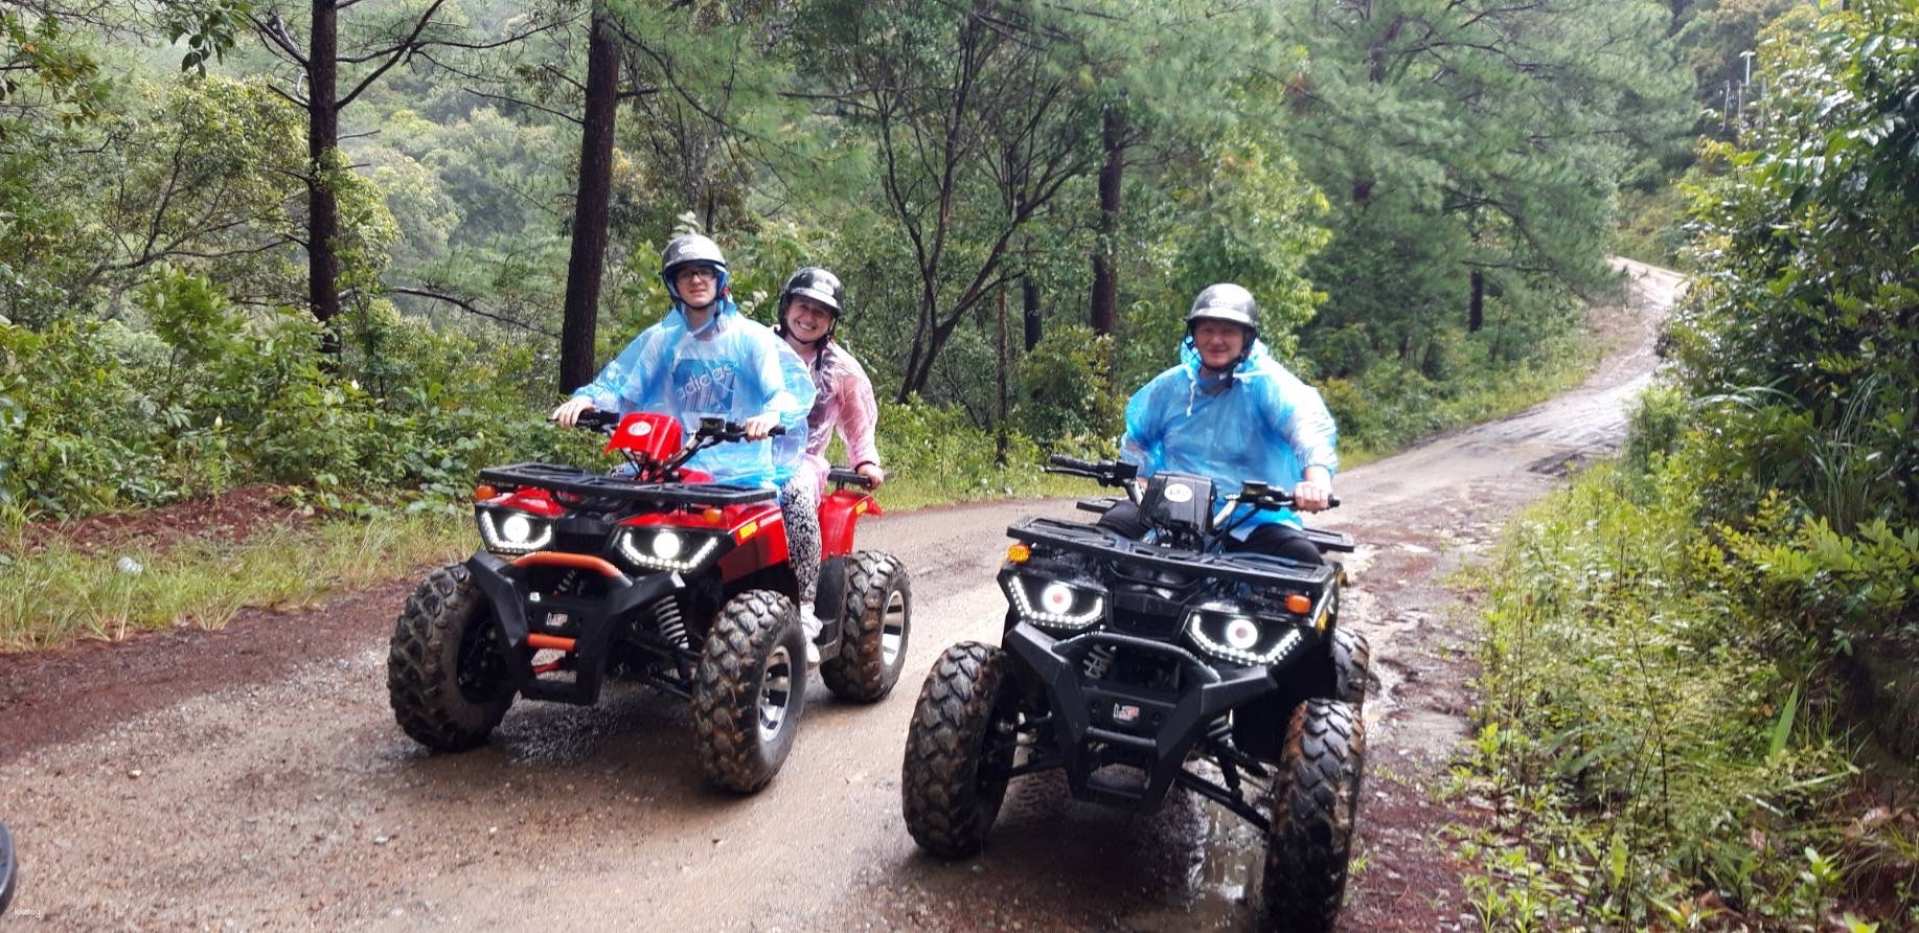 Chiang Mai One Day Trip : Doi Inthanon Tour and ATV Adventure | Thailand